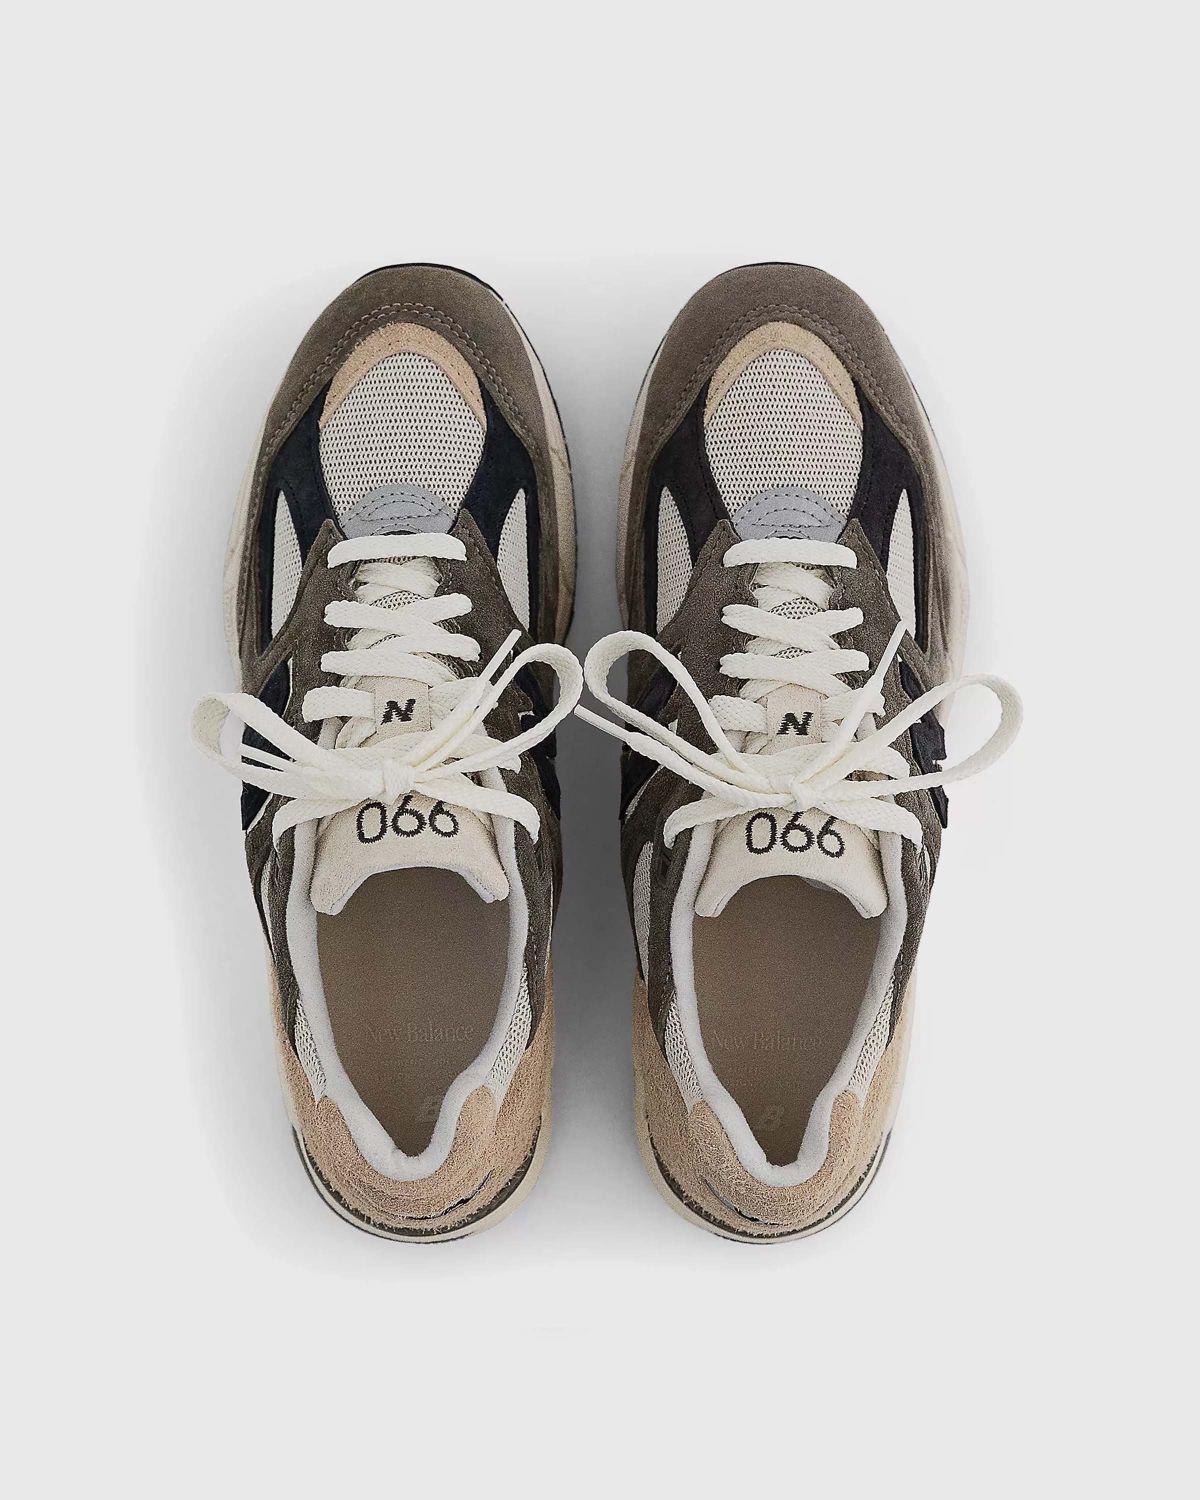 New Balance – M990GB2 Grey - Low Top Sneakers - Grey - Image 5